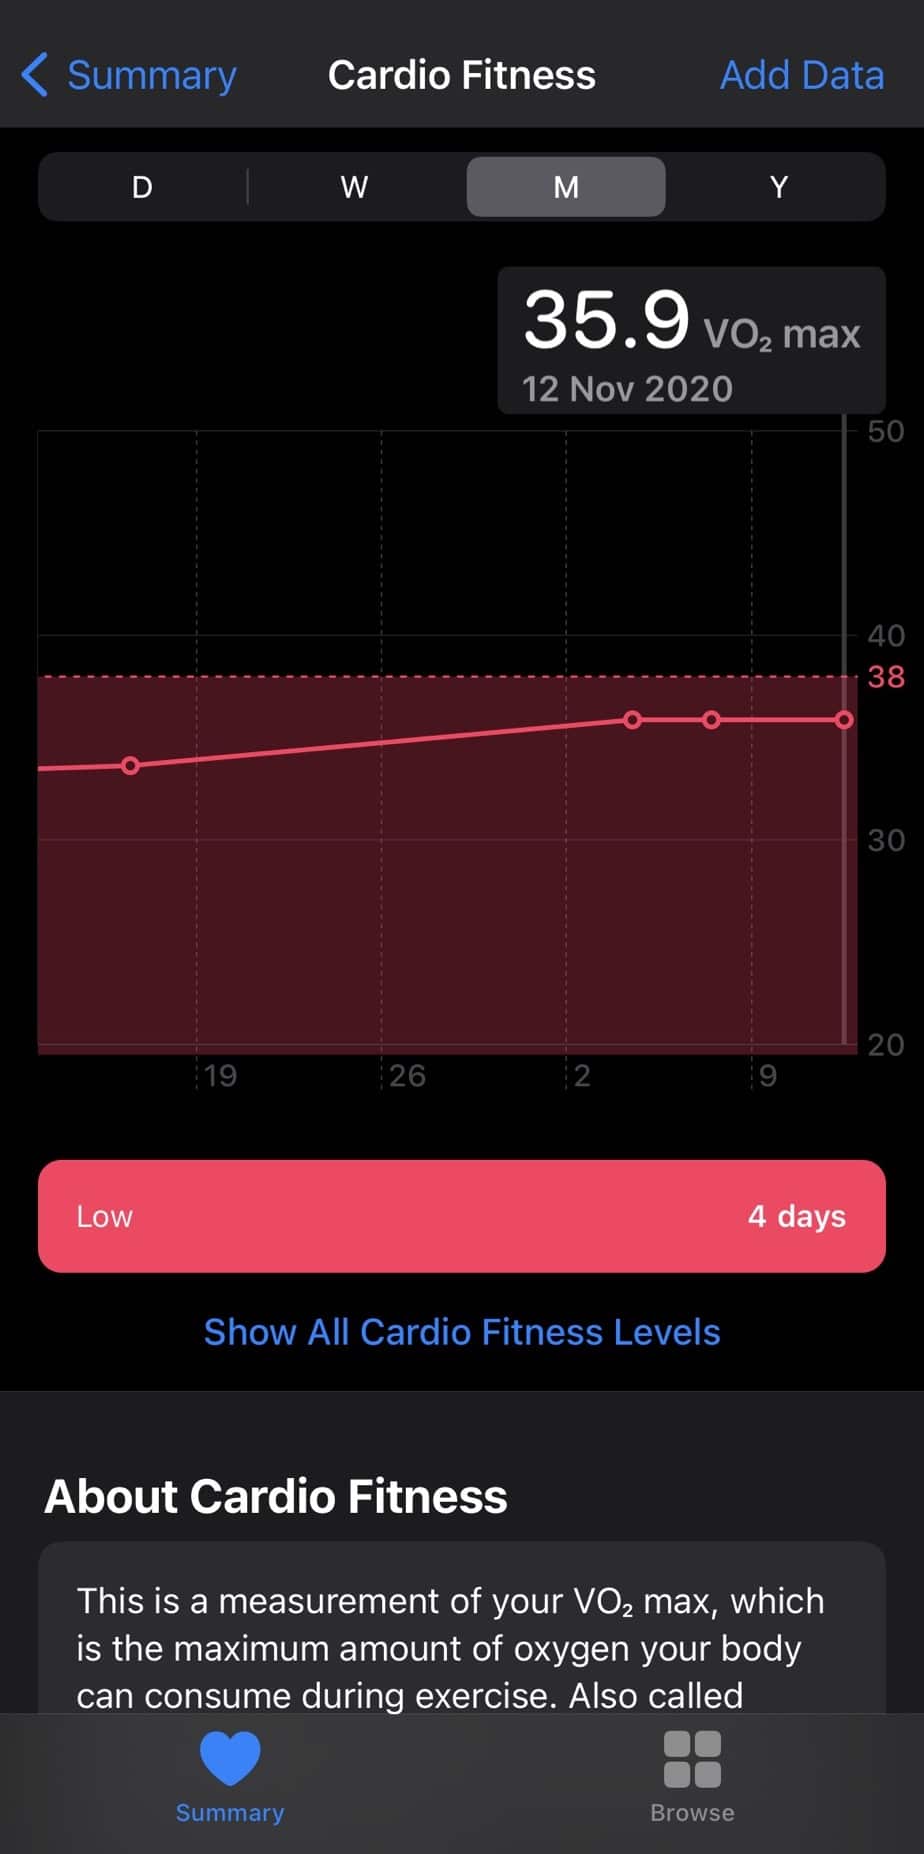 Cardio Fitness in iOS 14.3